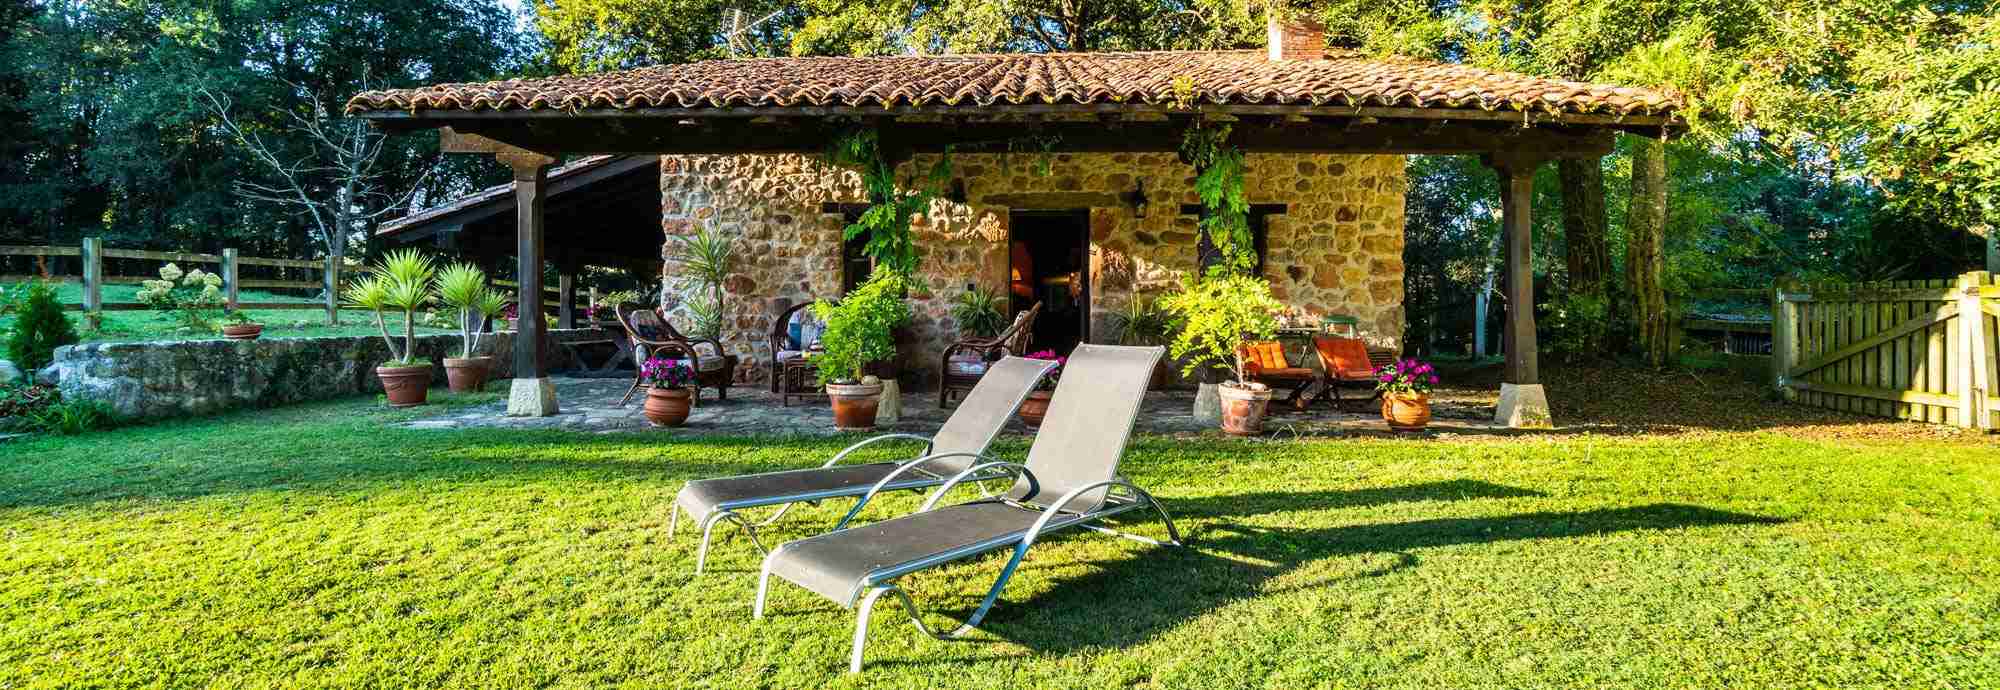 Smart, private cottage for exploring Picos de Europa, beaches, views